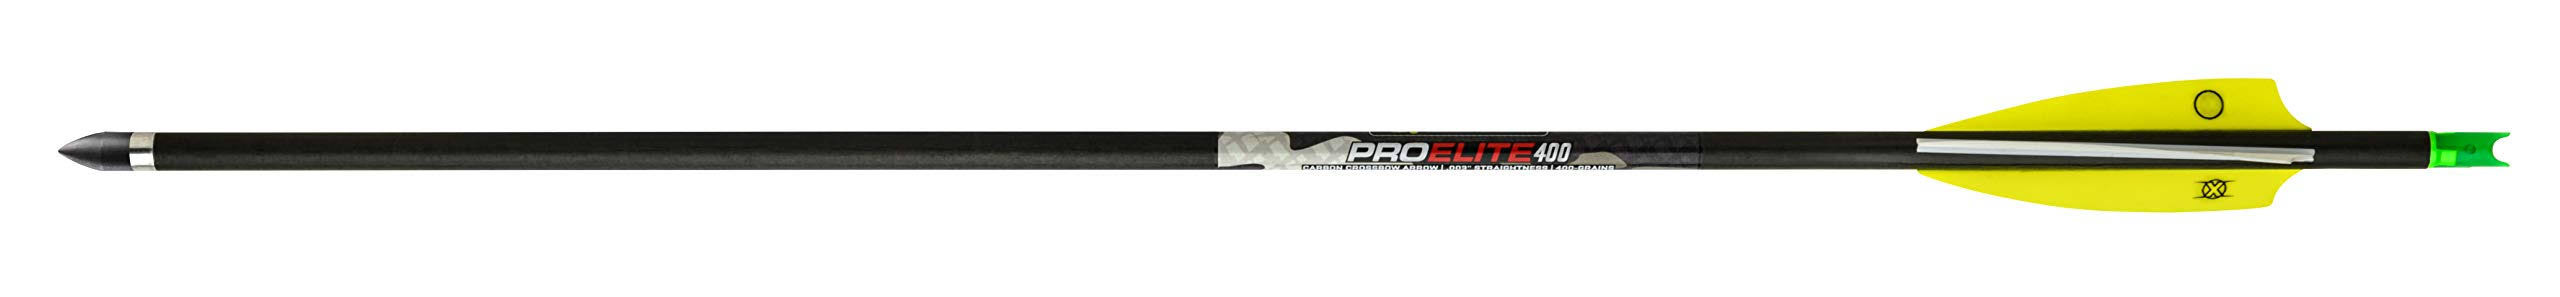 Tenpoint 20-inch Pro Elite 400 Carbon Crossbow Arrows